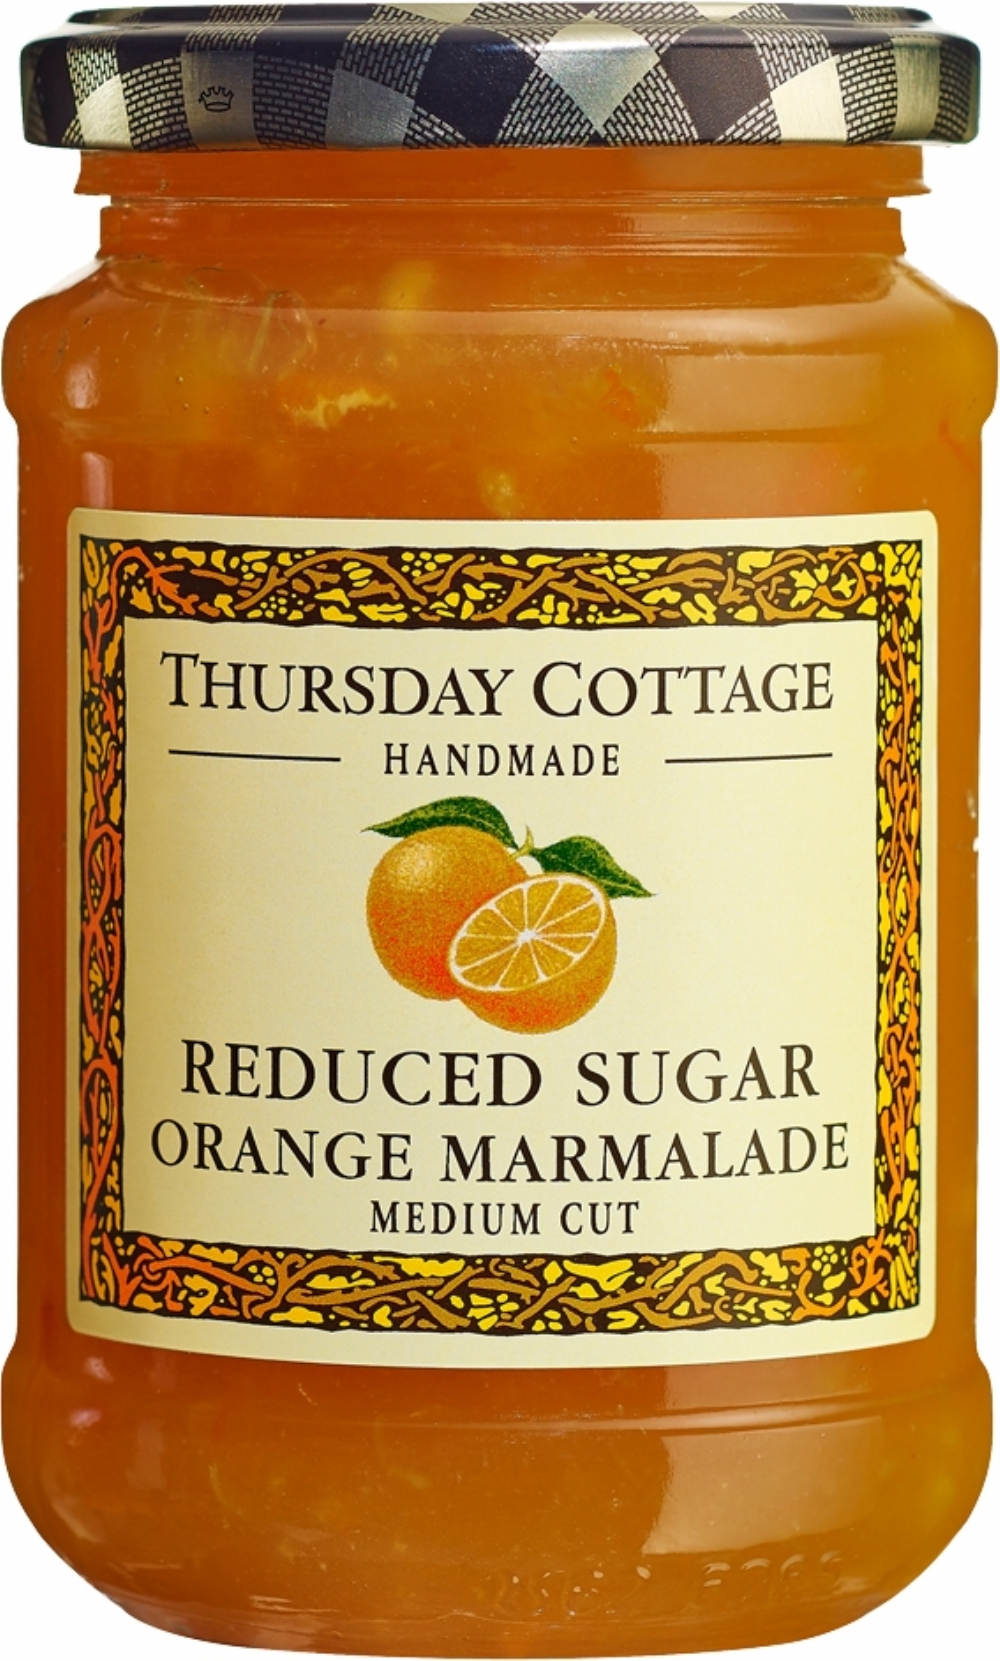 THURSDAY COTTAGE Orange Marmalade - Reduced Sugar